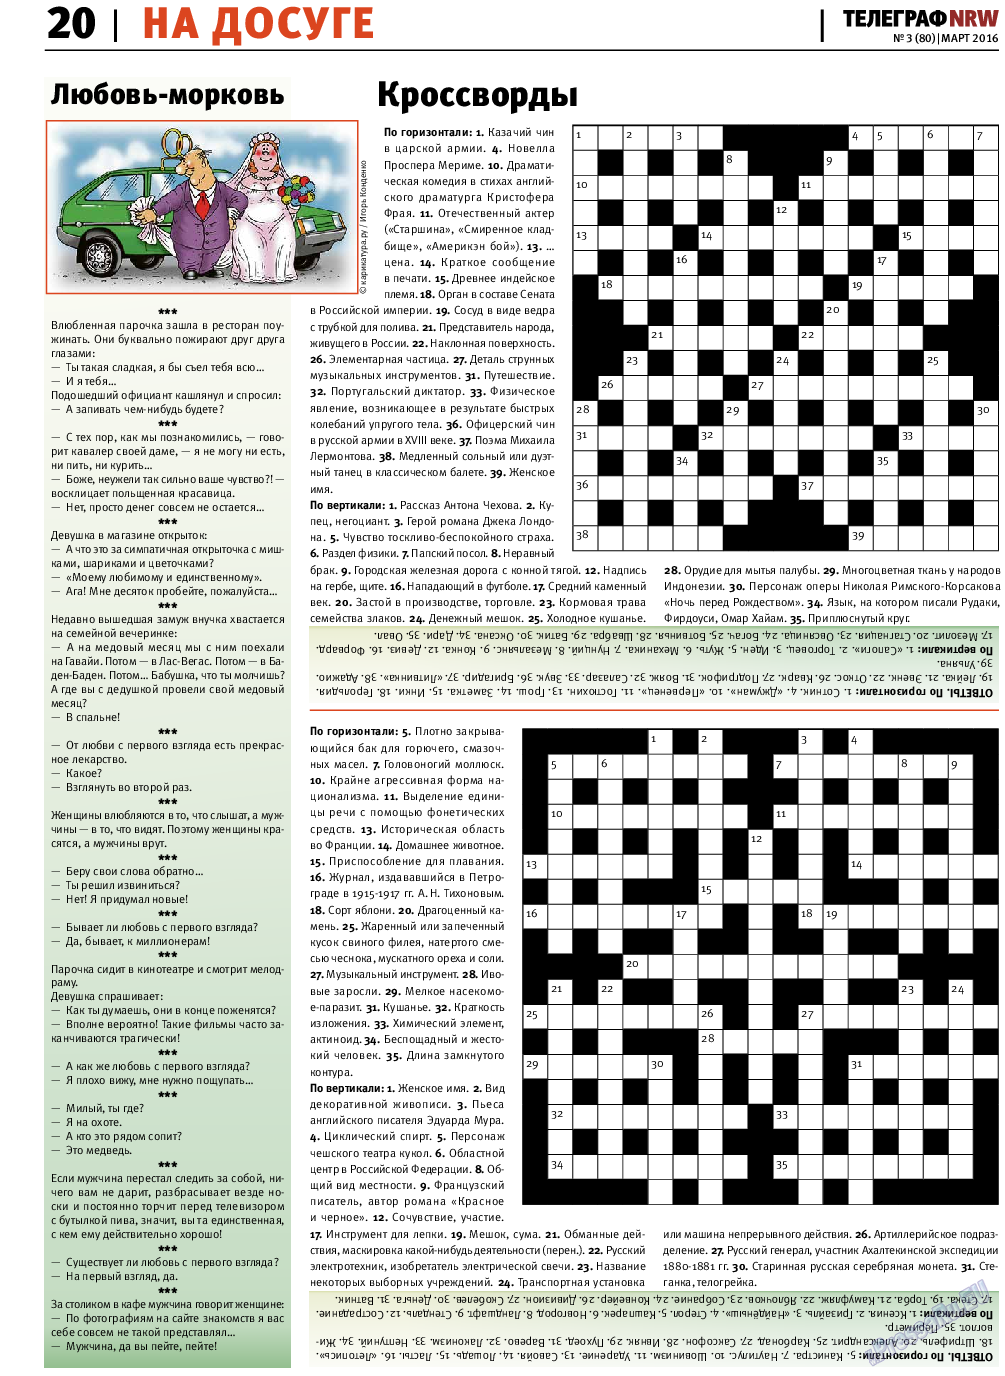 Телеграф NRW, газета. 2016 №3 стр.20